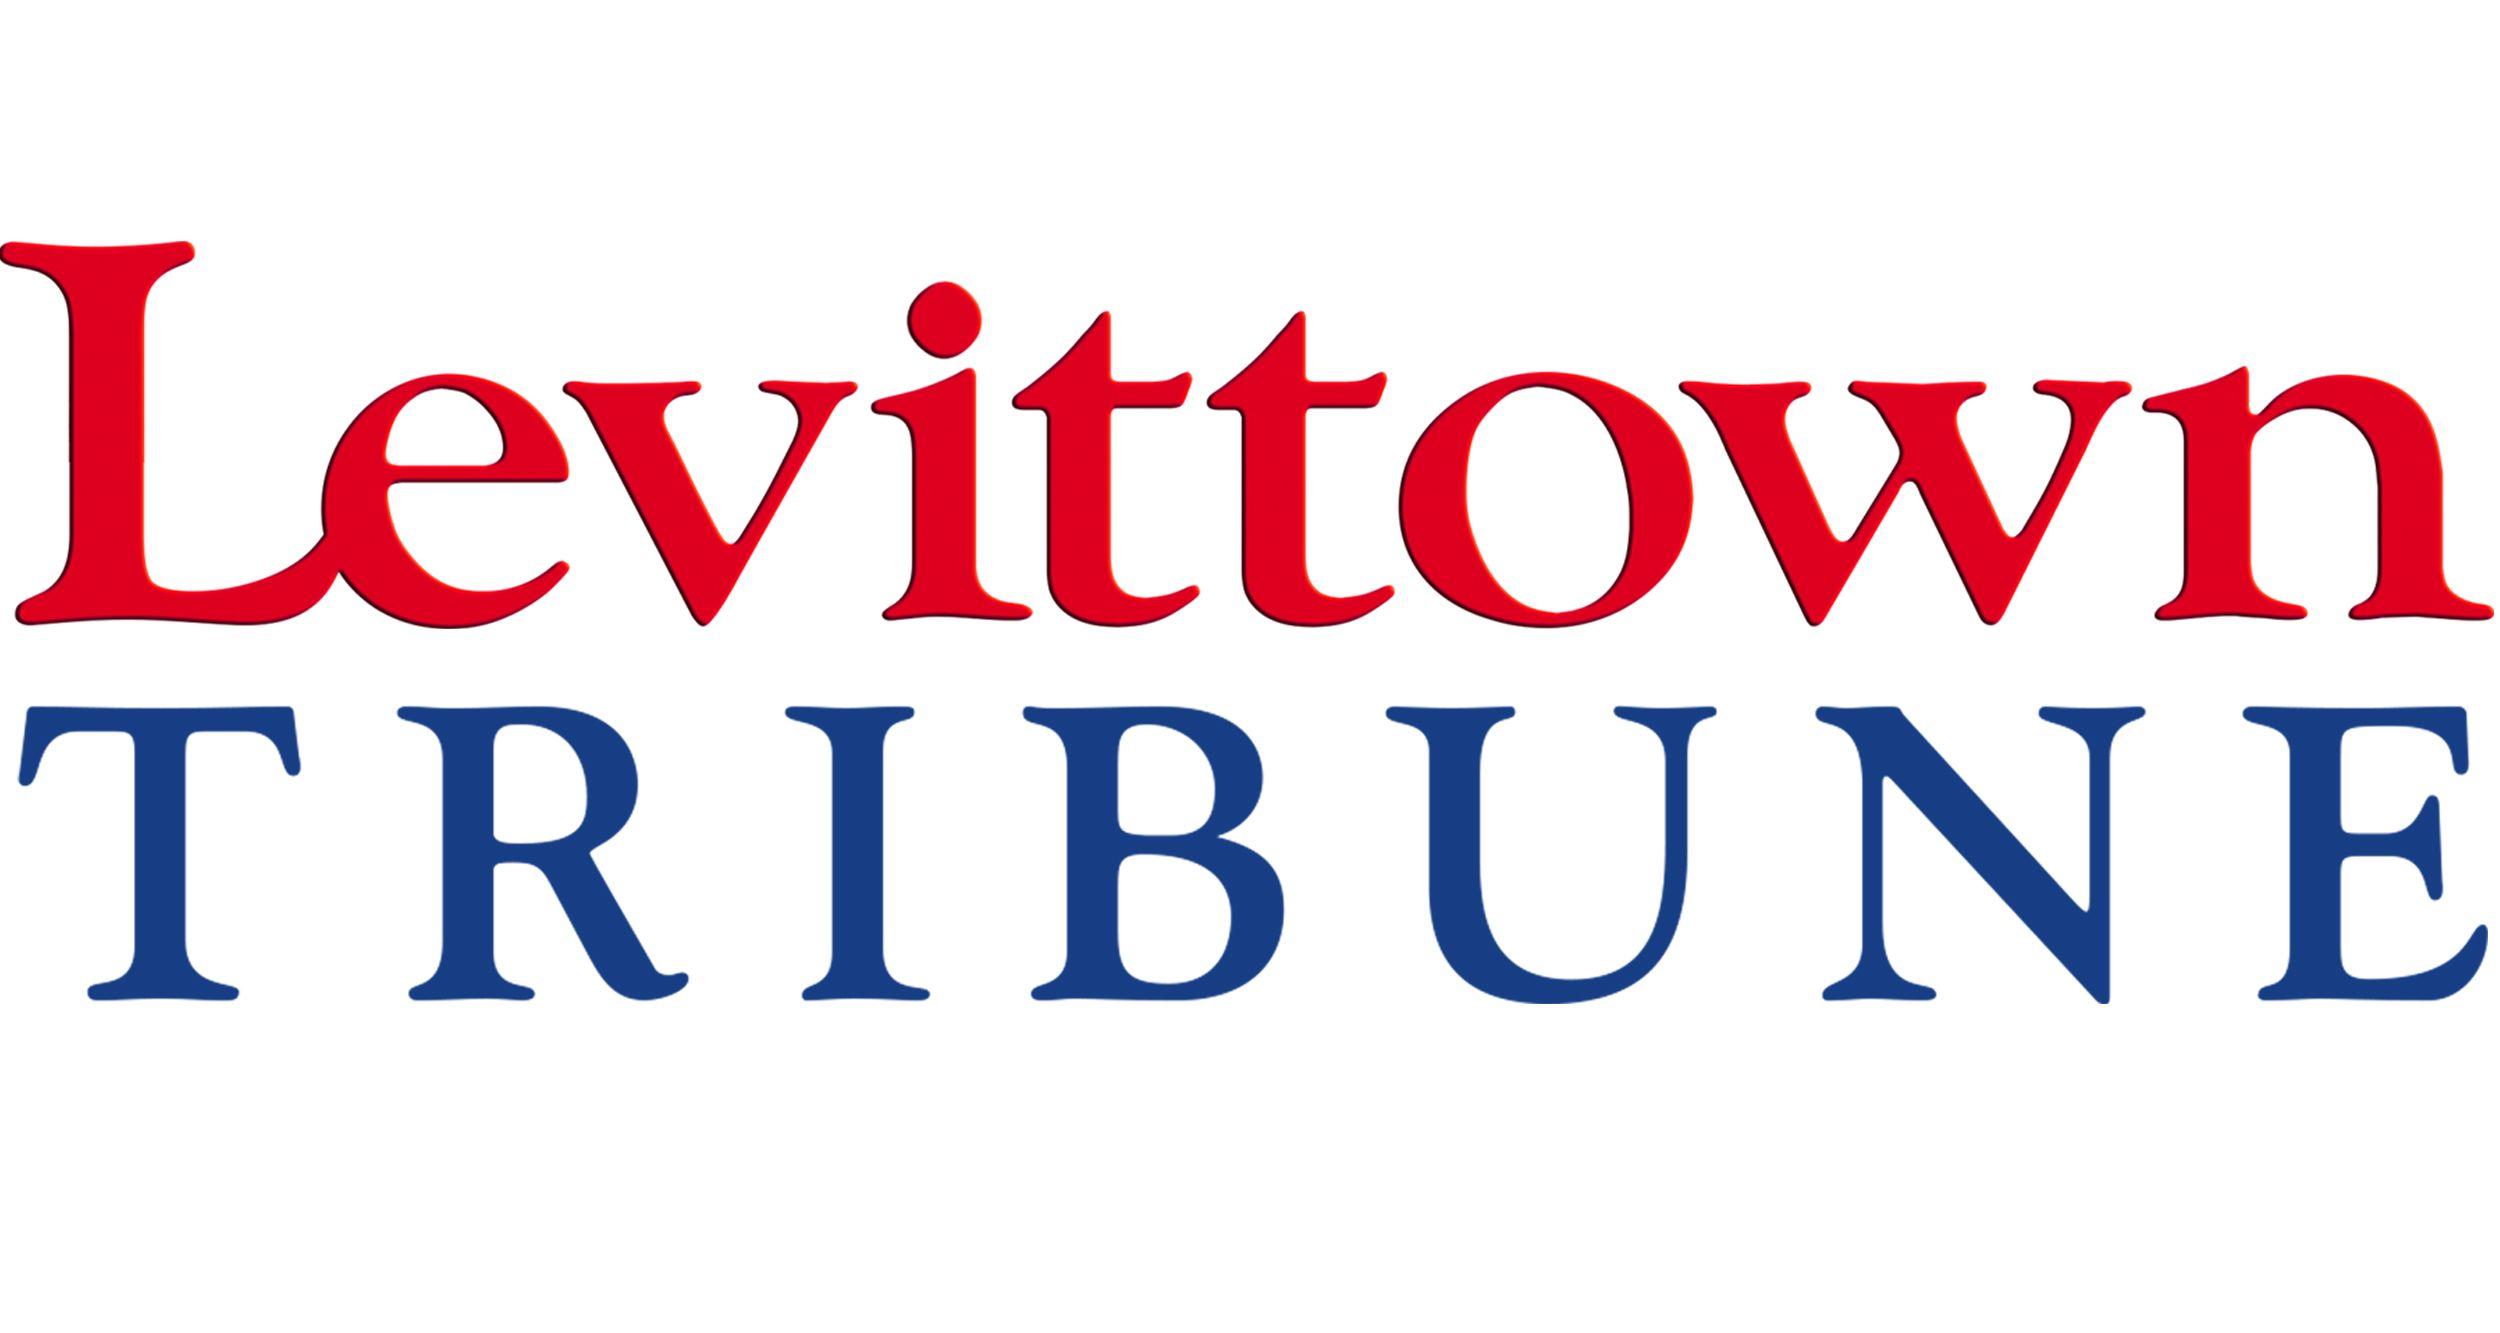 Levittown Logo - Levittown Tribune | An Anton Publication